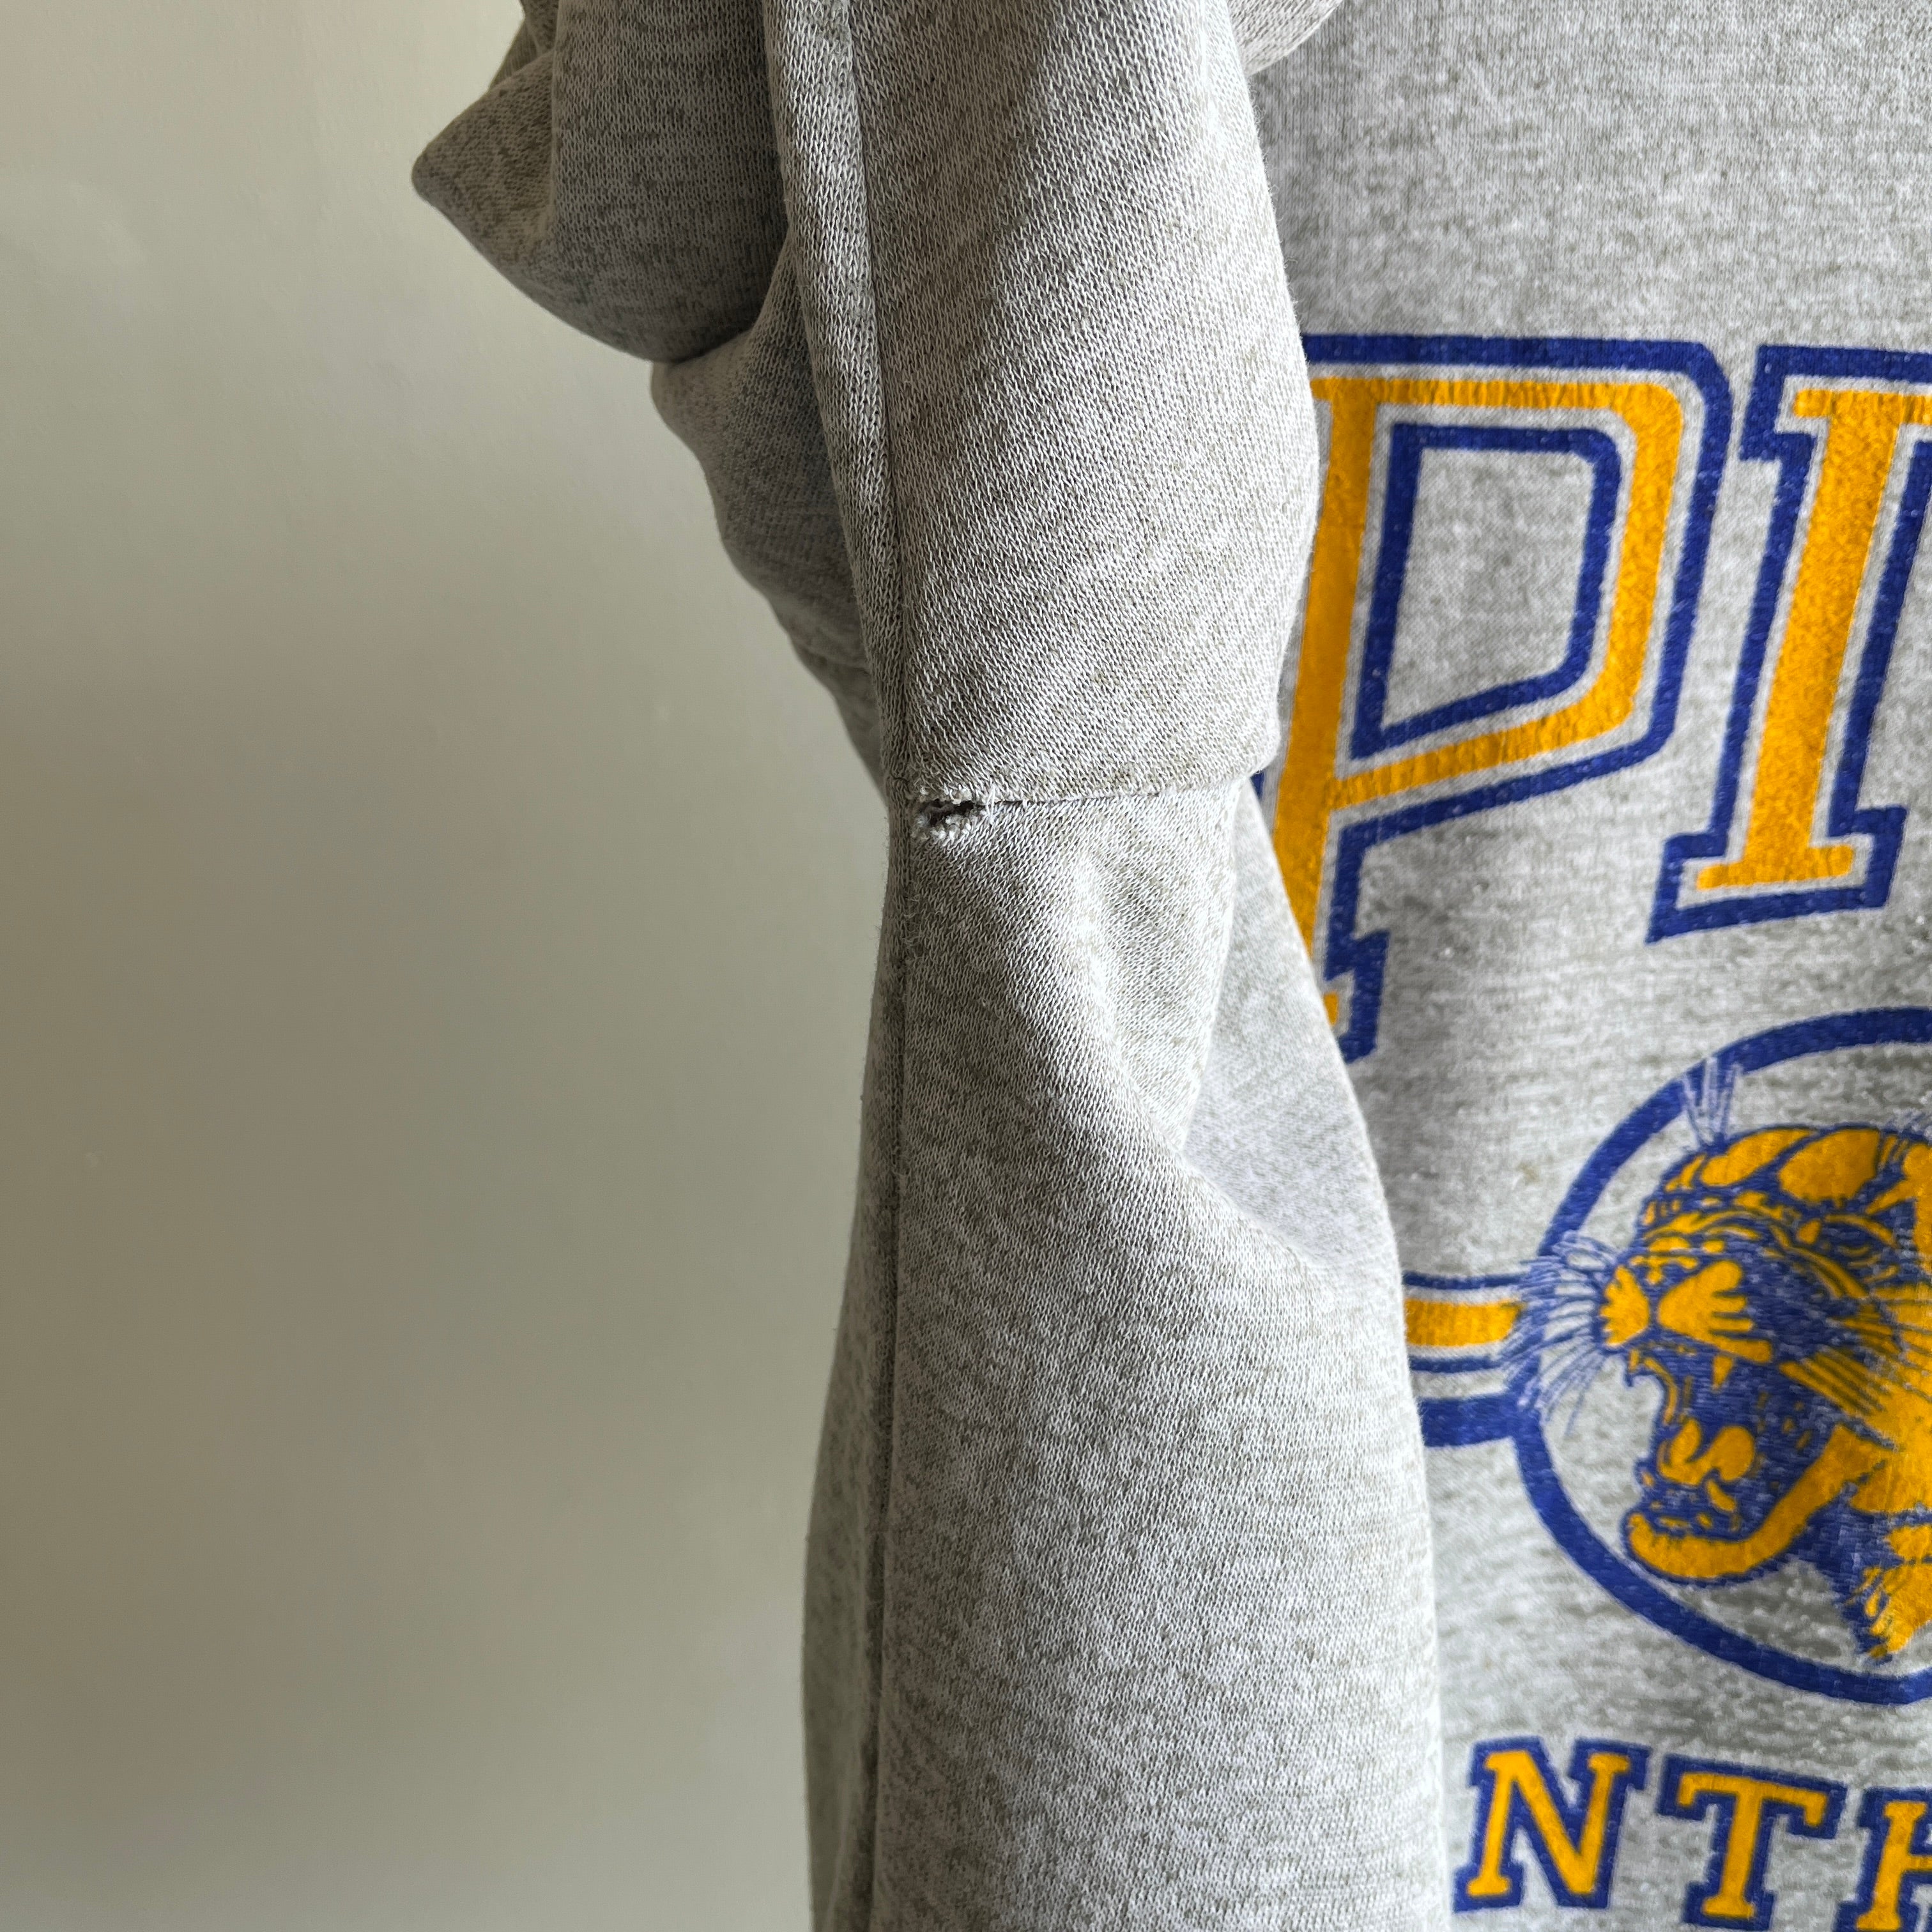 1990/00s Pitt Panthers Thrashed Sweatshirt